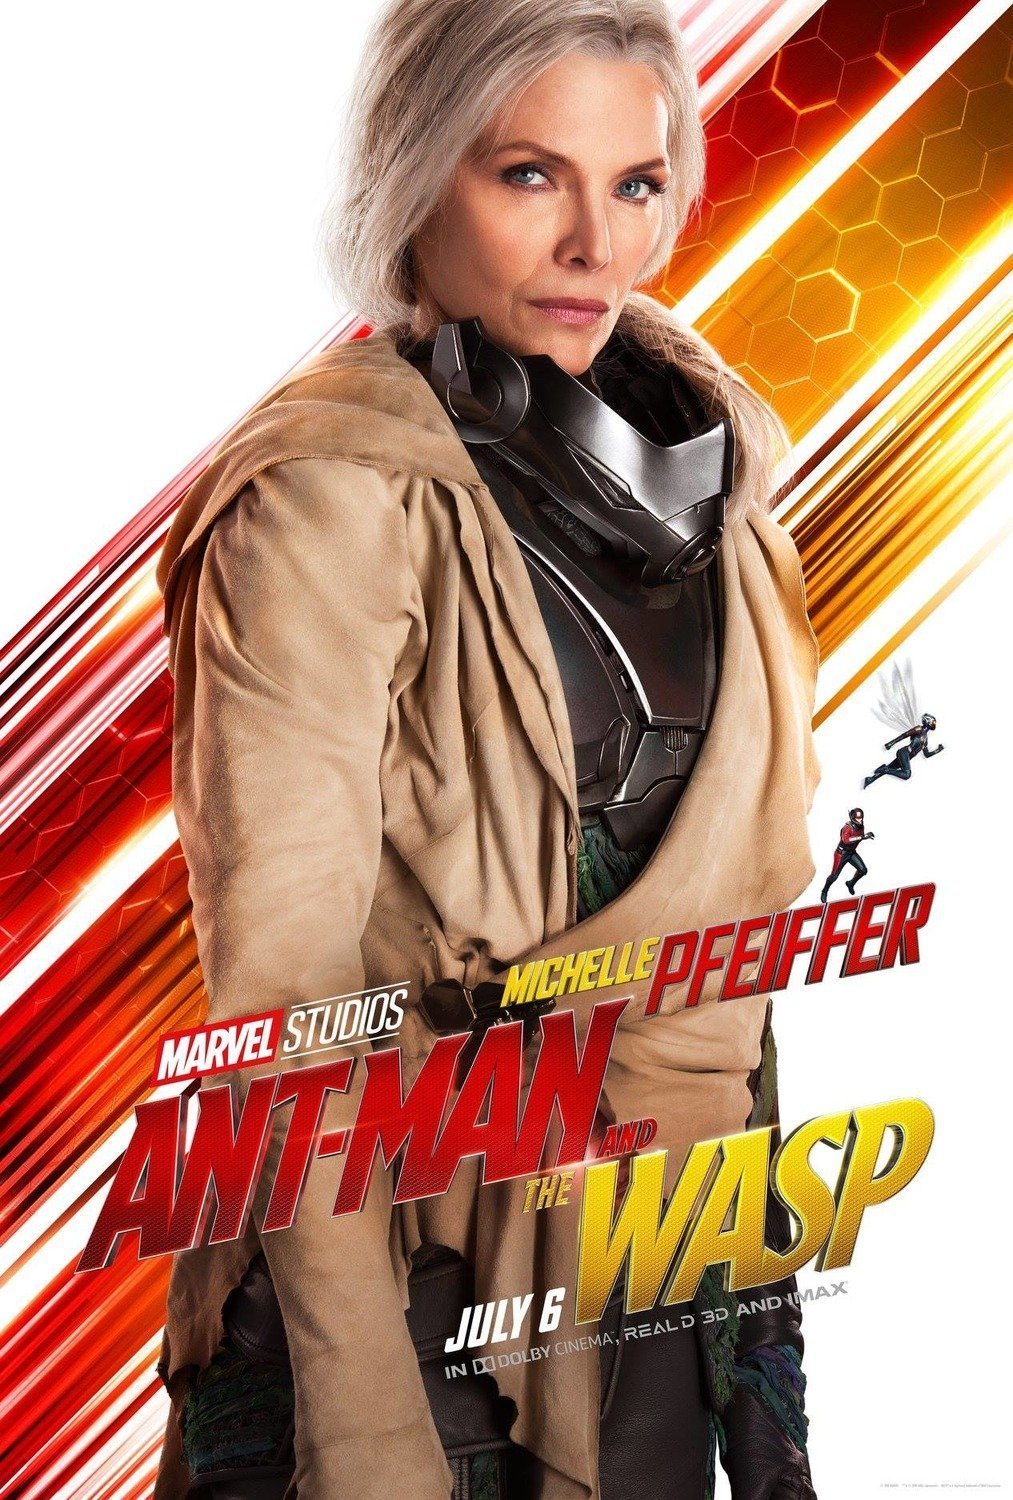 Poster du film Ant-Man et la Guêpe avec Janet Van Dyne (Michelle Pfeiffer)